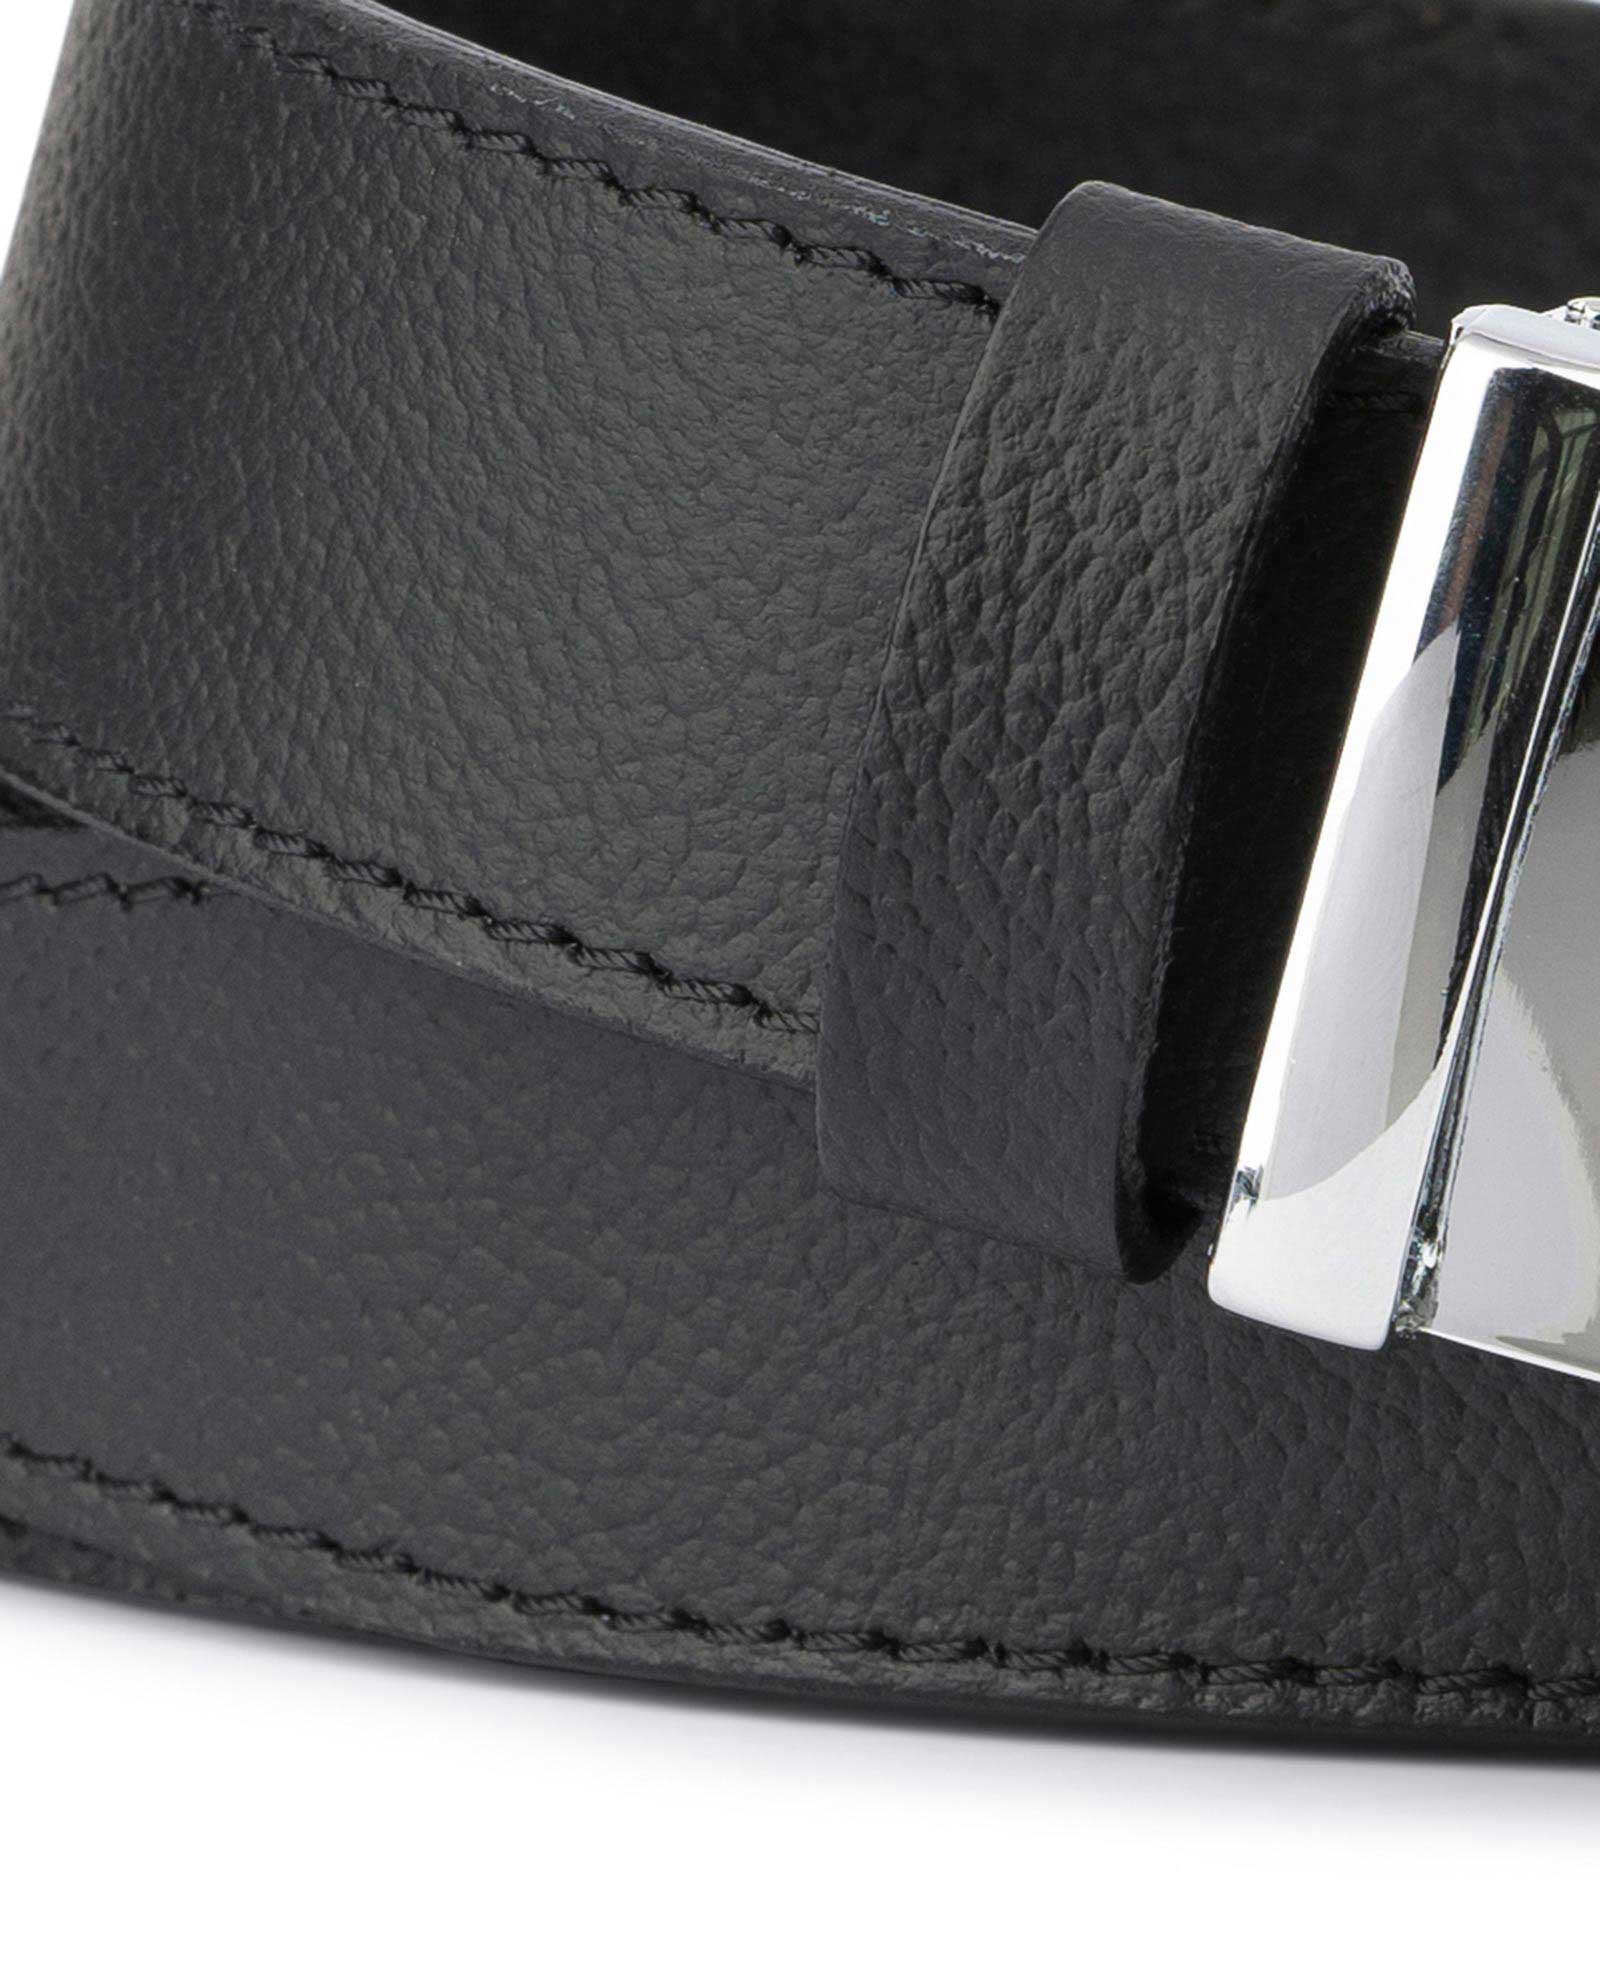 Men's Black Leather Comfort Click Belt | Blank Buckle 36 / 90 cm - Black | Capo Pelle